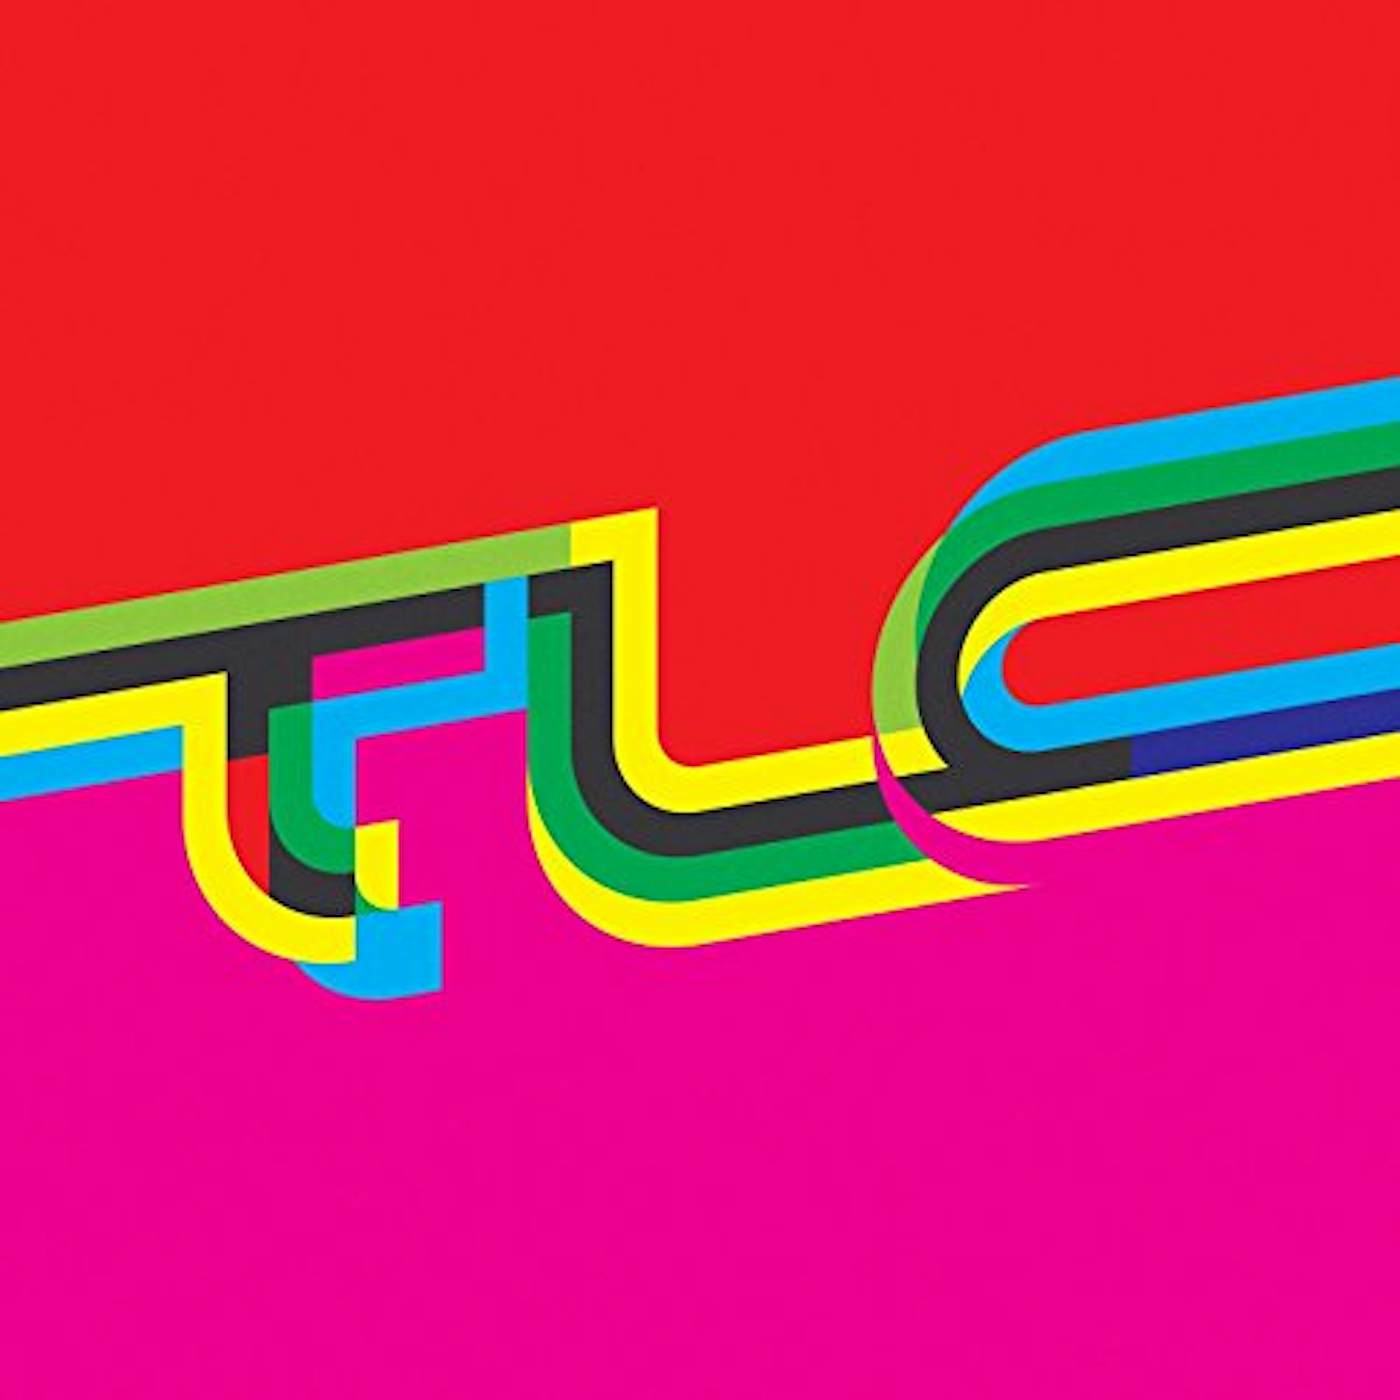 TLC CD